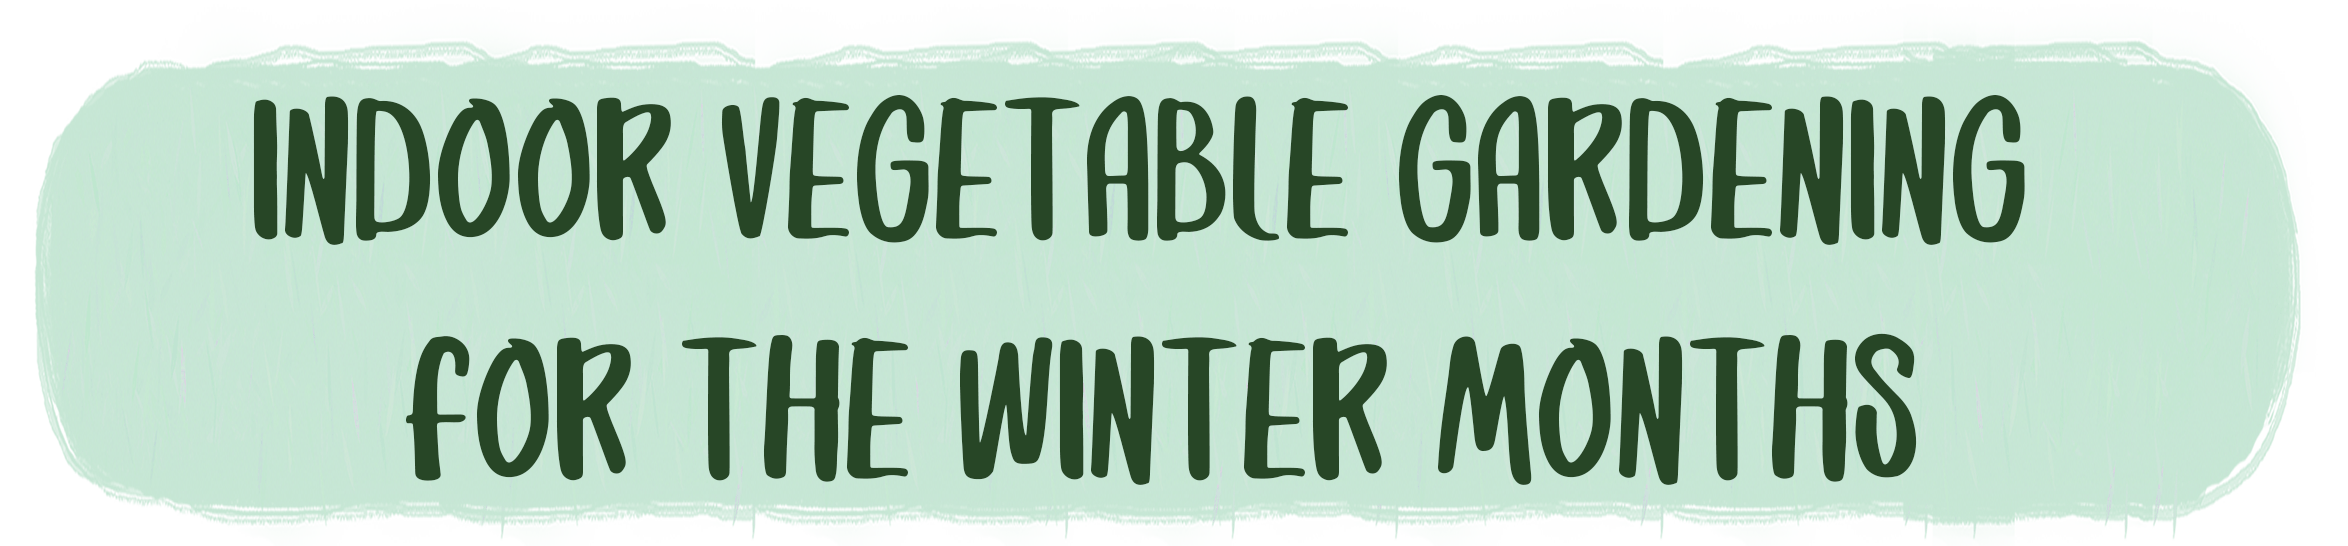 497-indoor-vegetable-gardening-for-the-winter-months-16816127978353.png